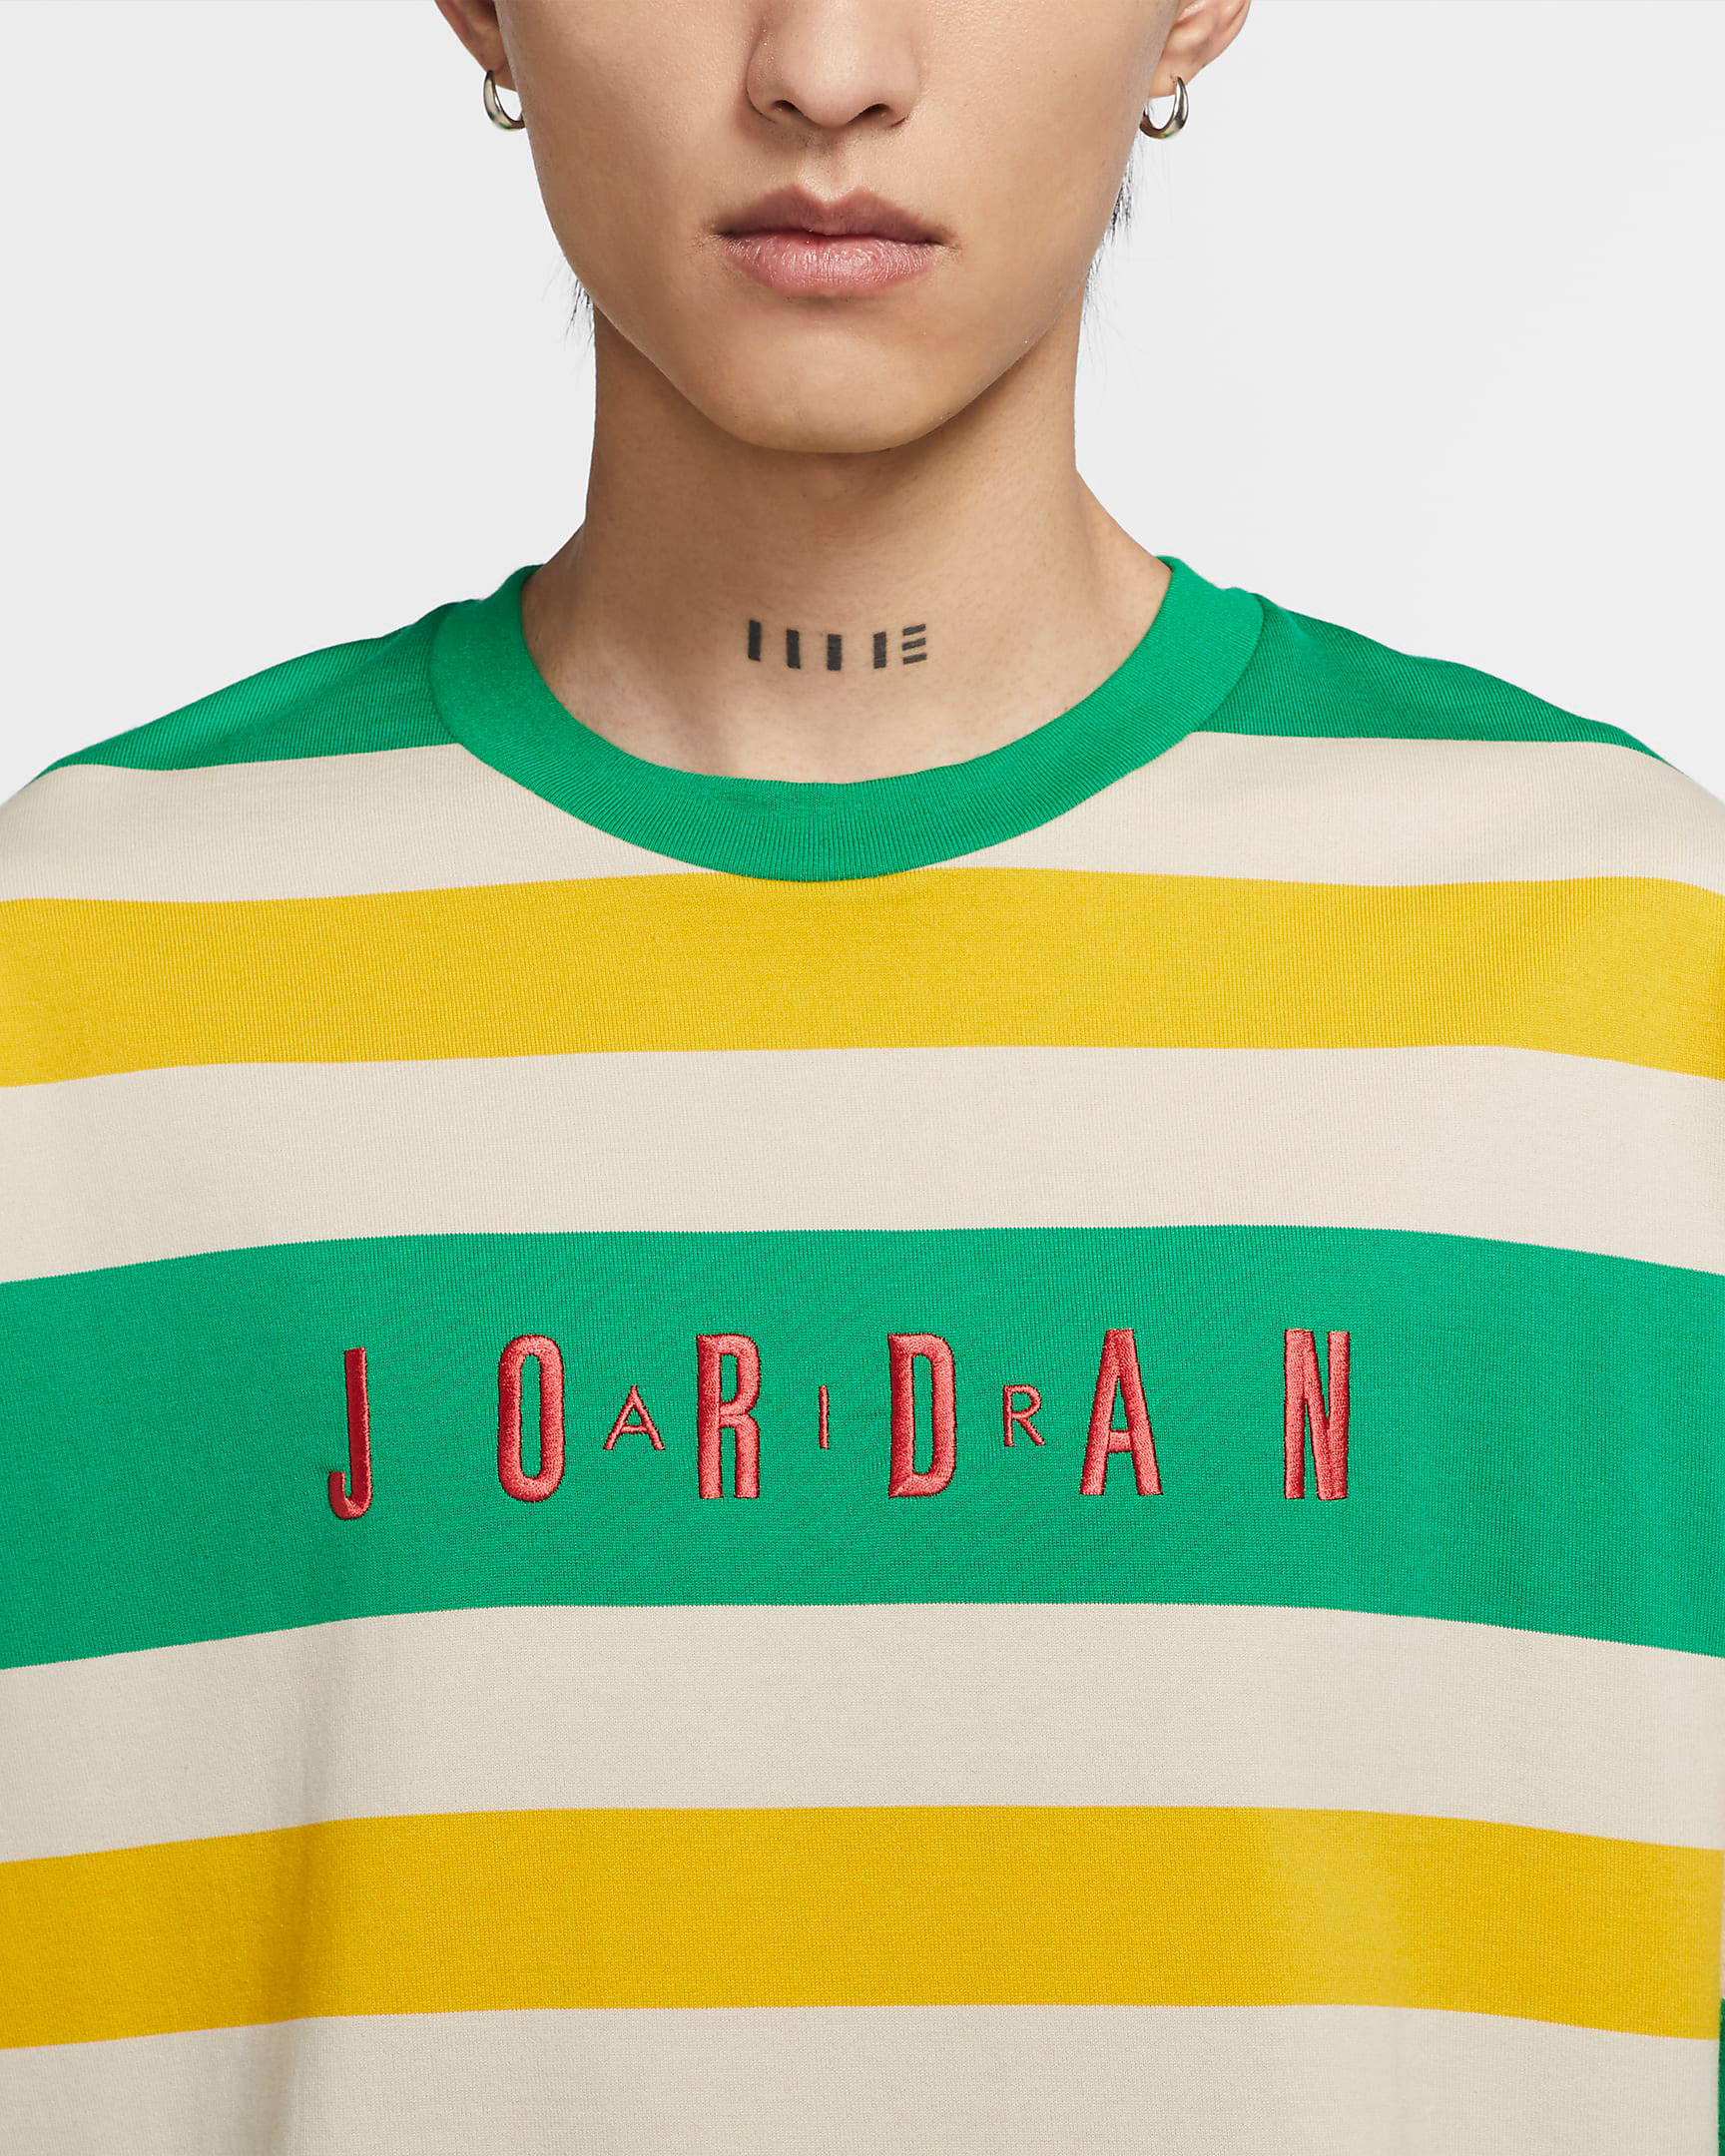 green jordan 13 shirt